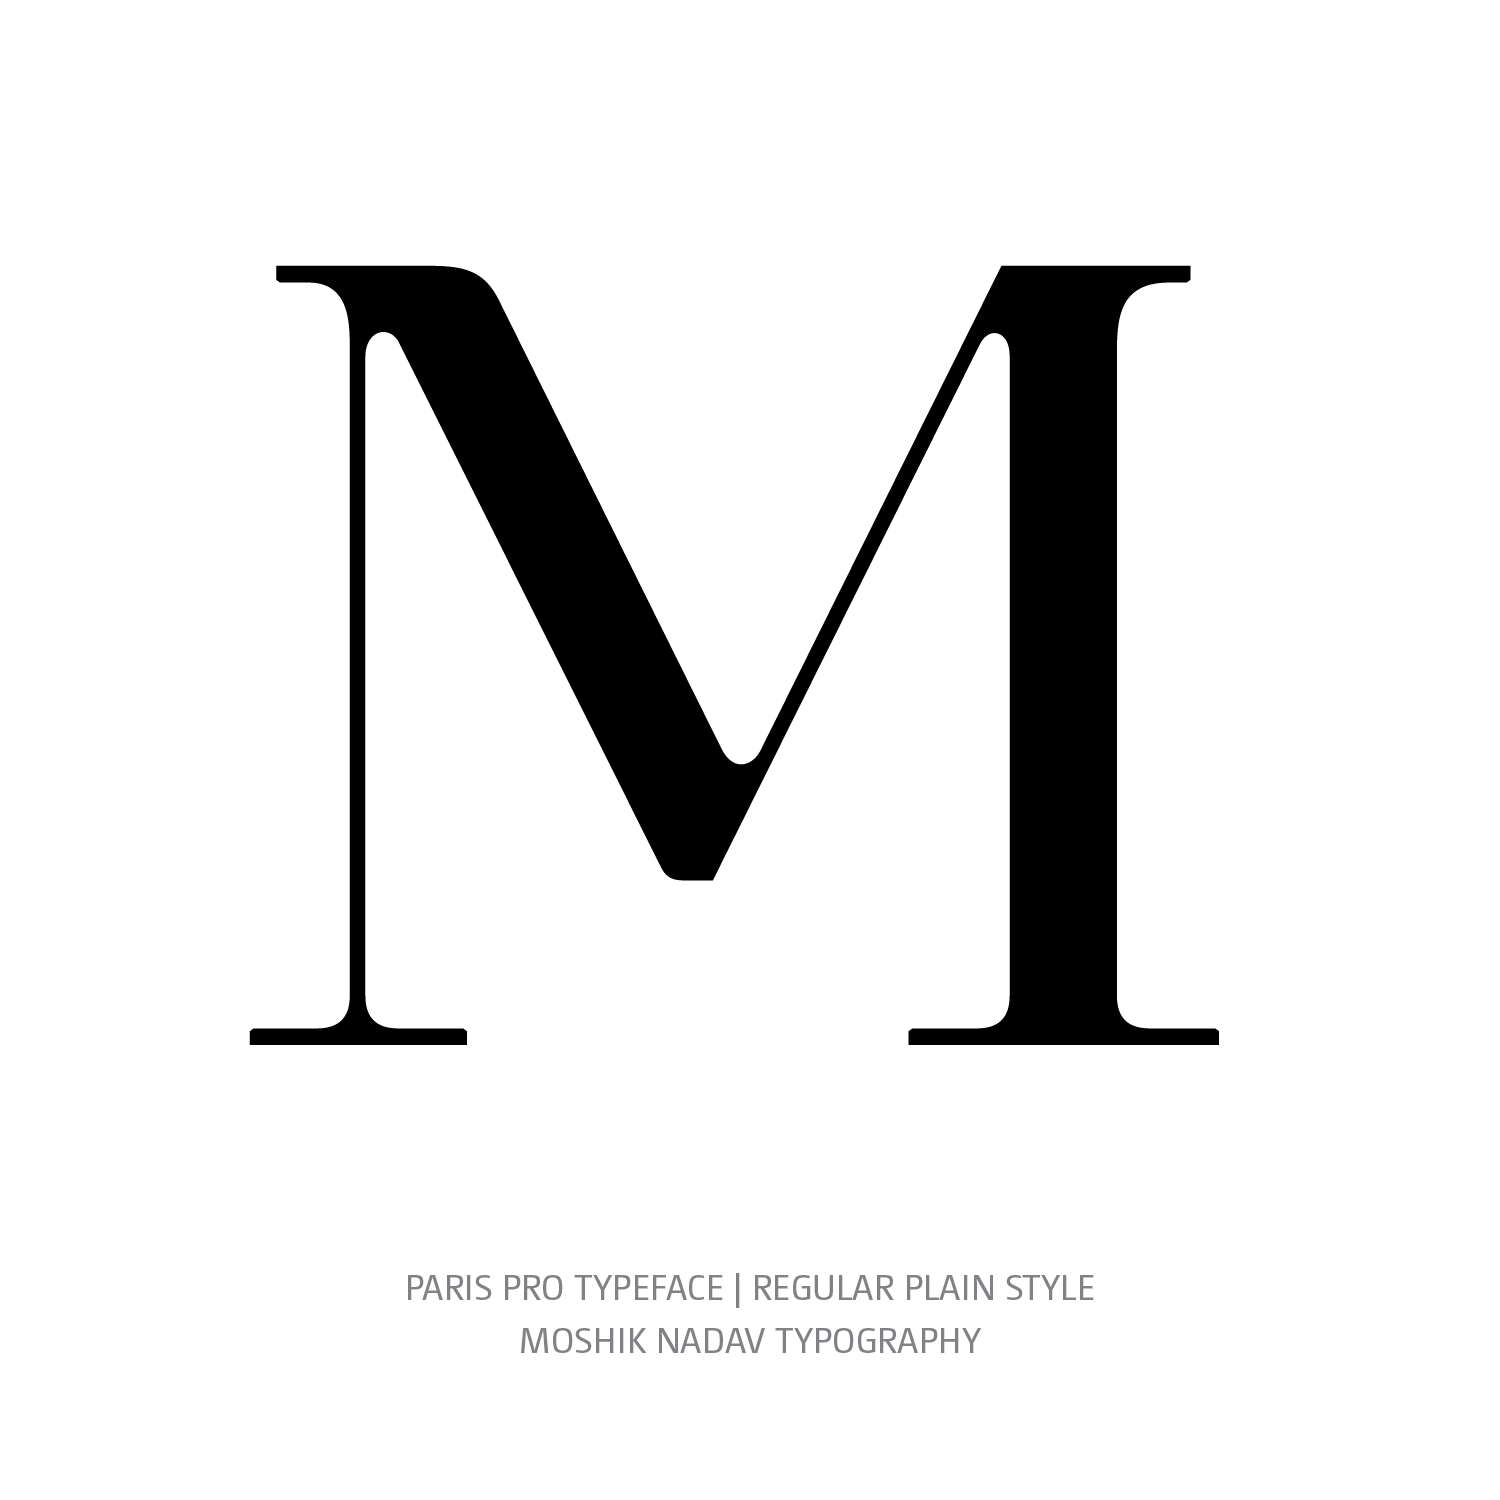 Paris Pro Typeface Regular Plain M